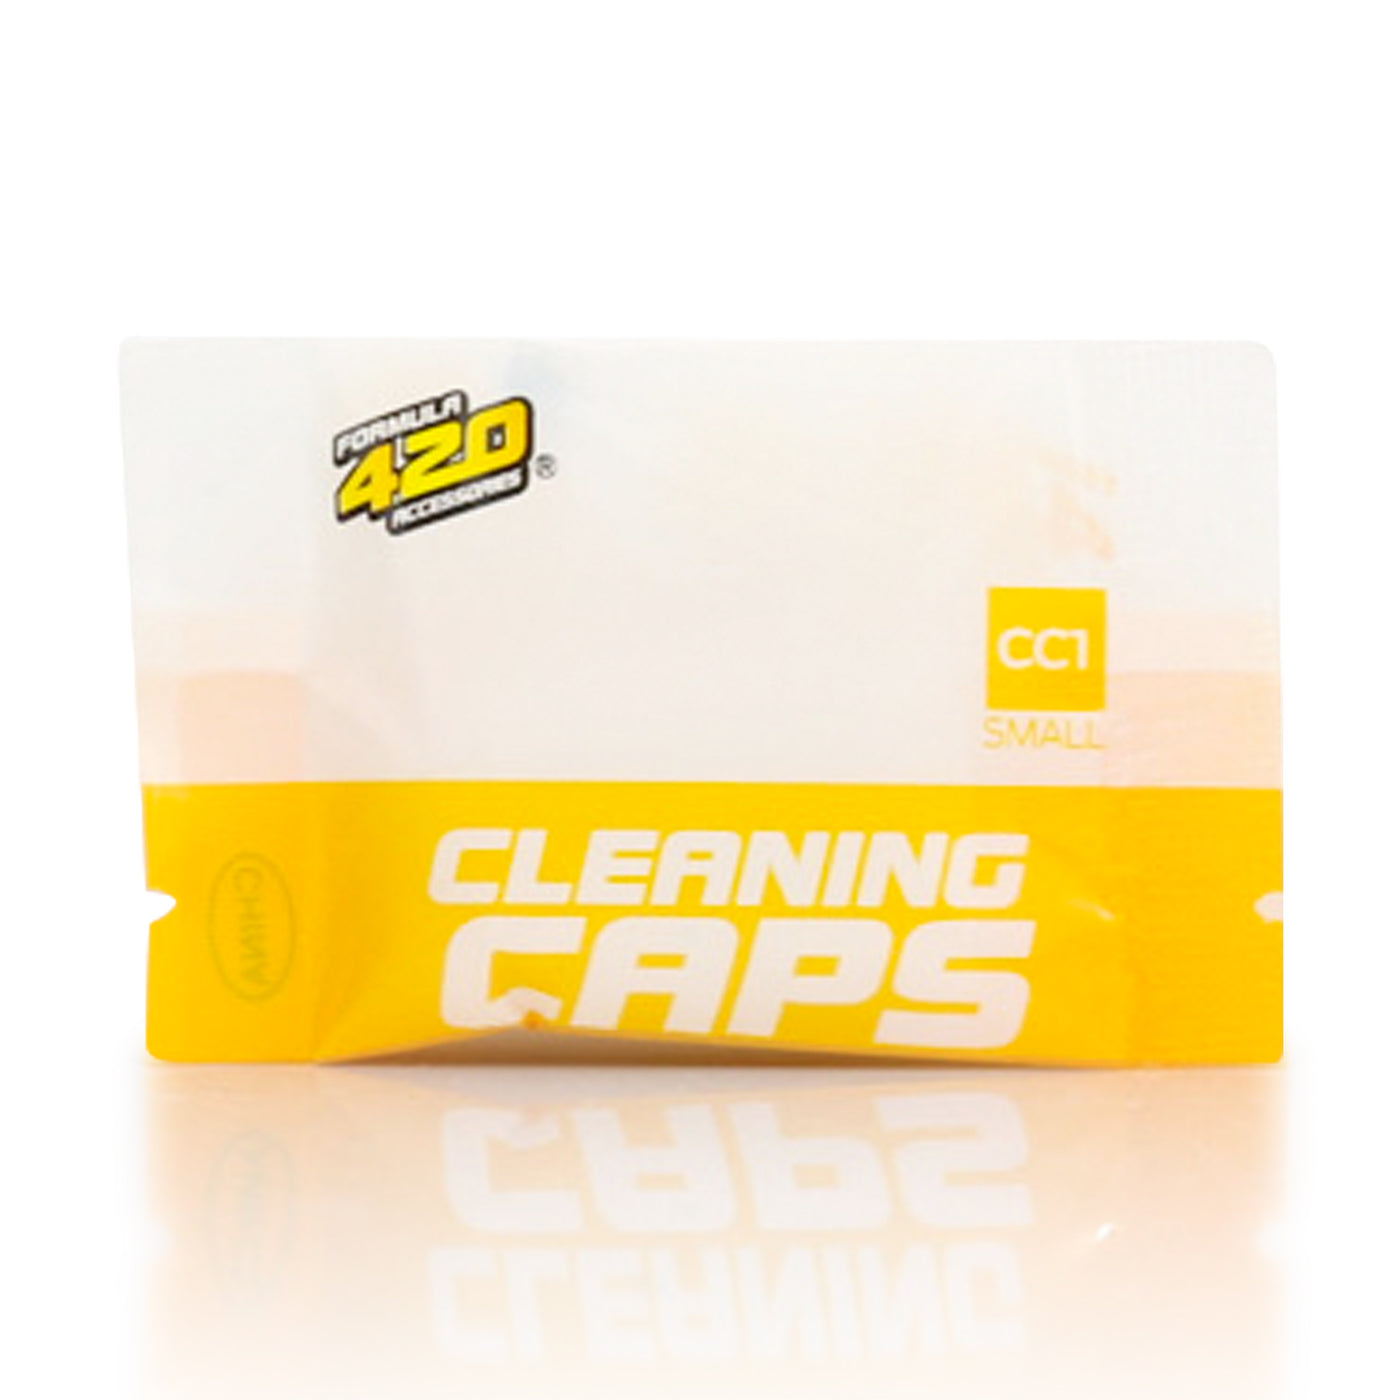 Formula 420 Cleaning Caps